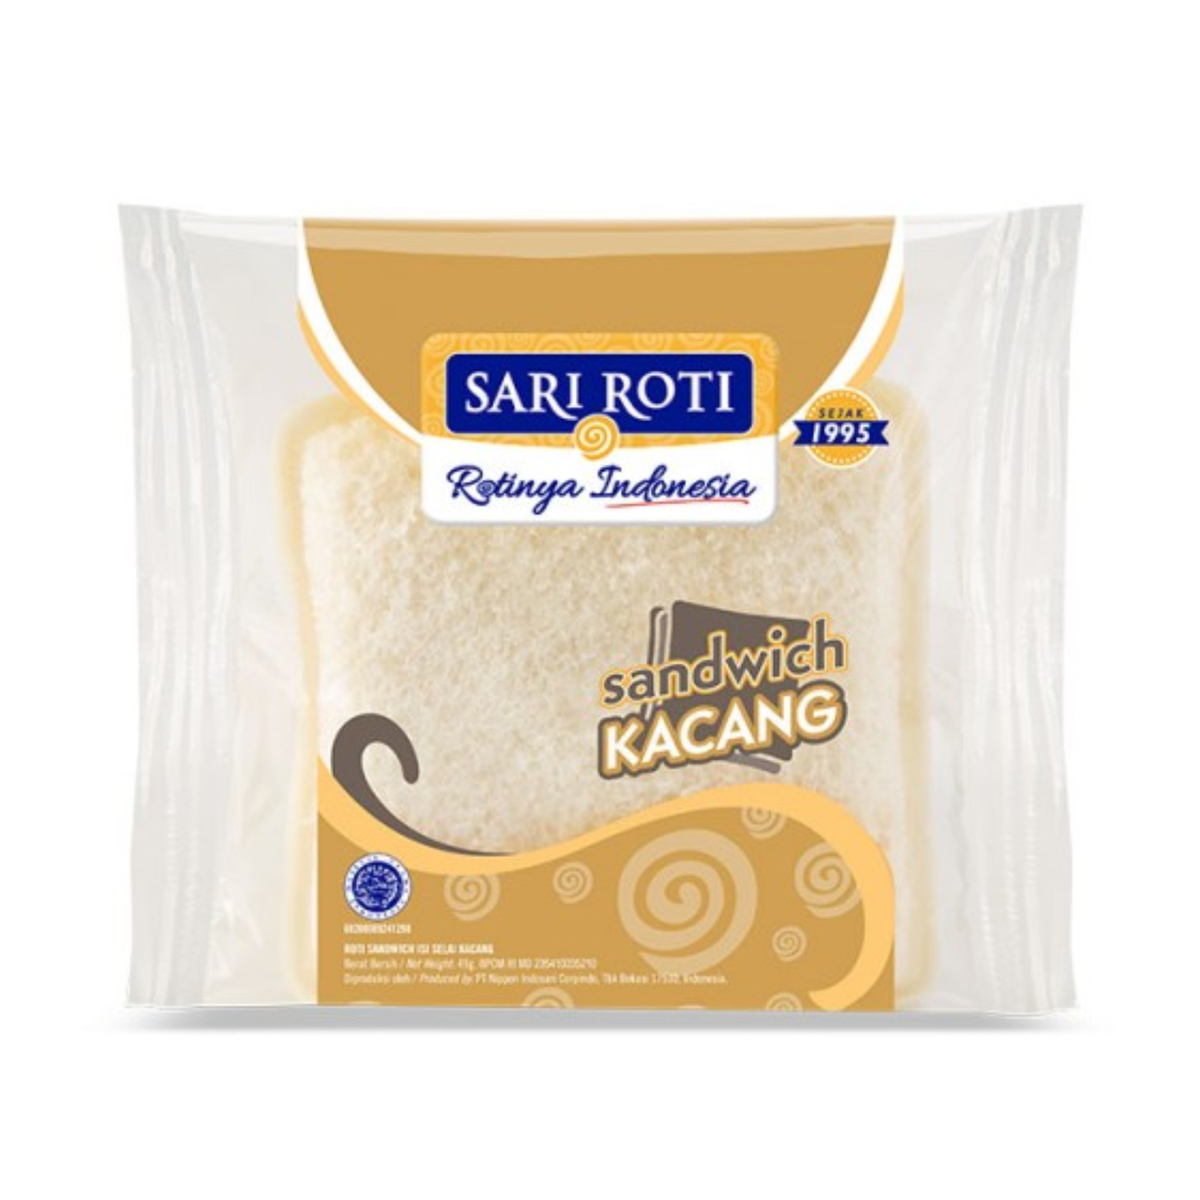 Sari Roti Sandwich Peanut Cream 49g